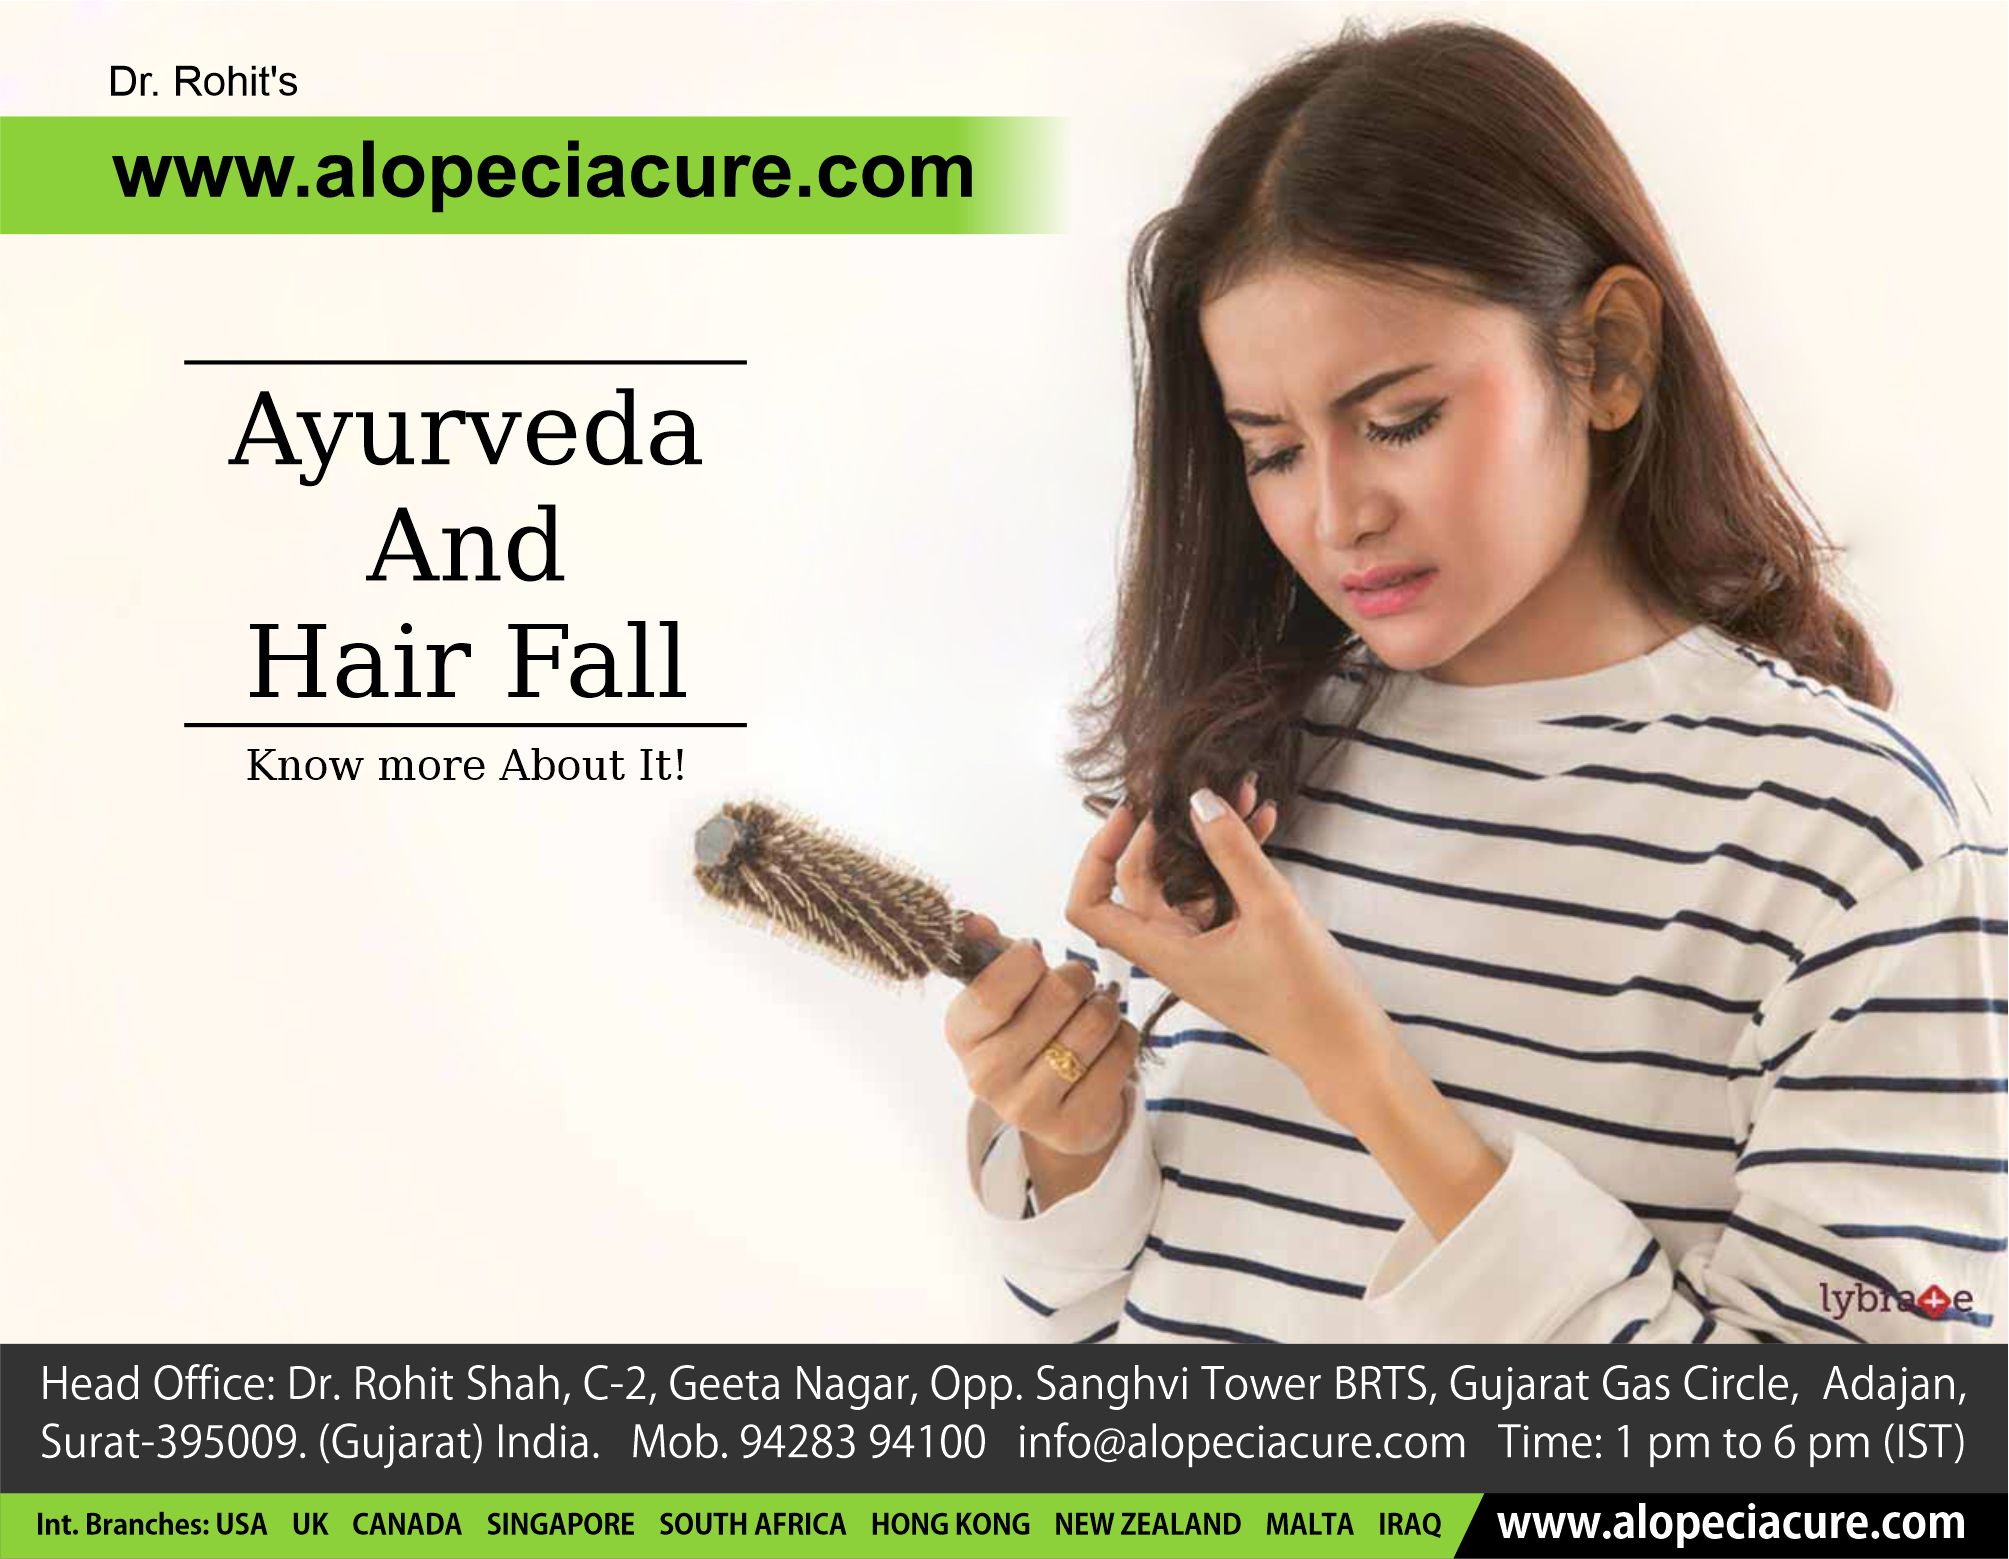 Ayurveda helps in hair fall